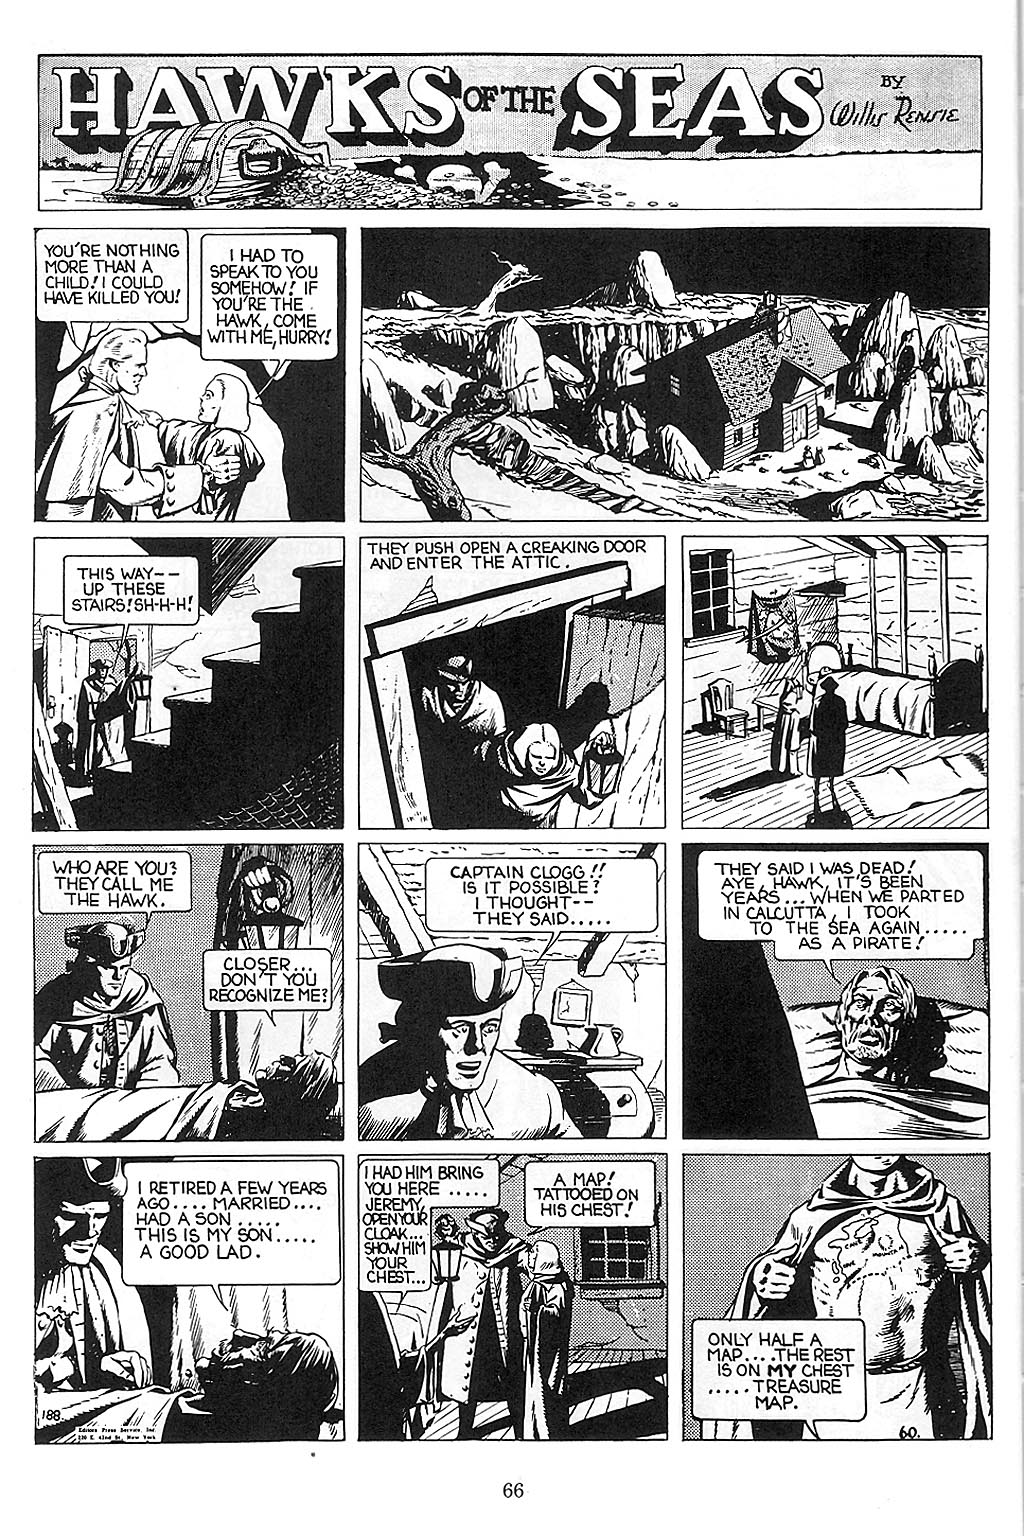 Read online Will Eisner's Hawks of the Seas comic -  Issue # TPB - 67